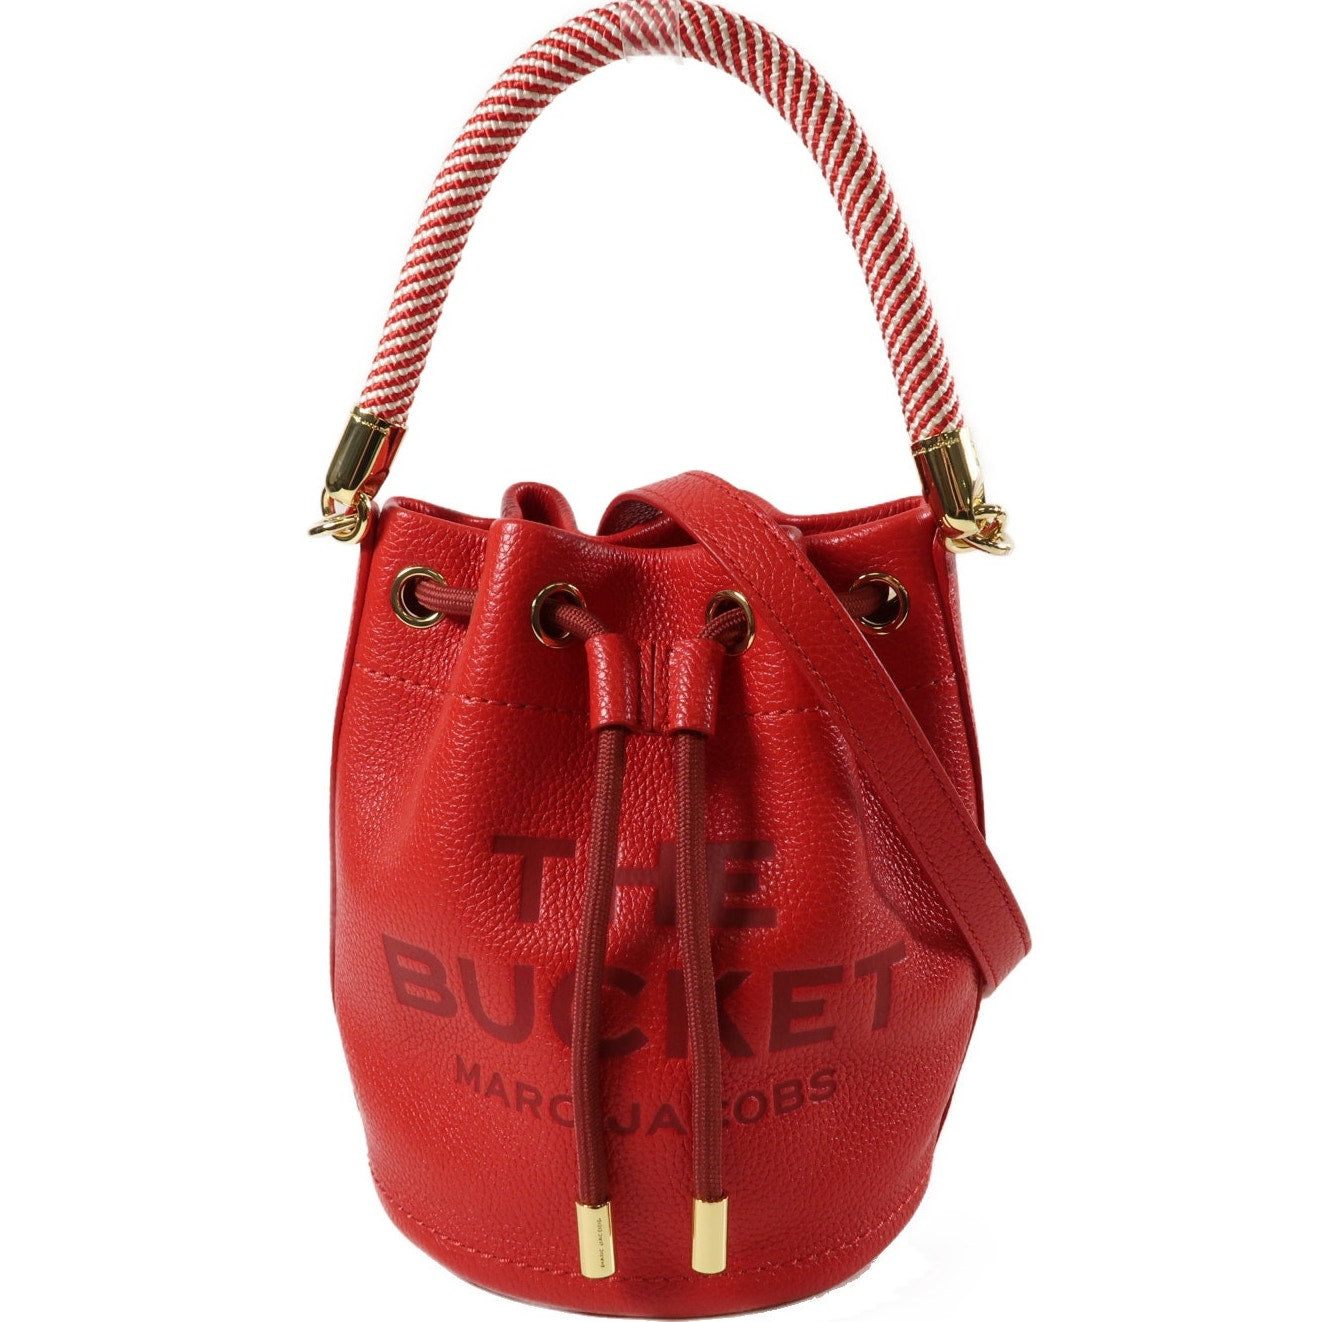 Authentic MARC JACOBS Bucket Bag 2-Way Shoulder Bag Red